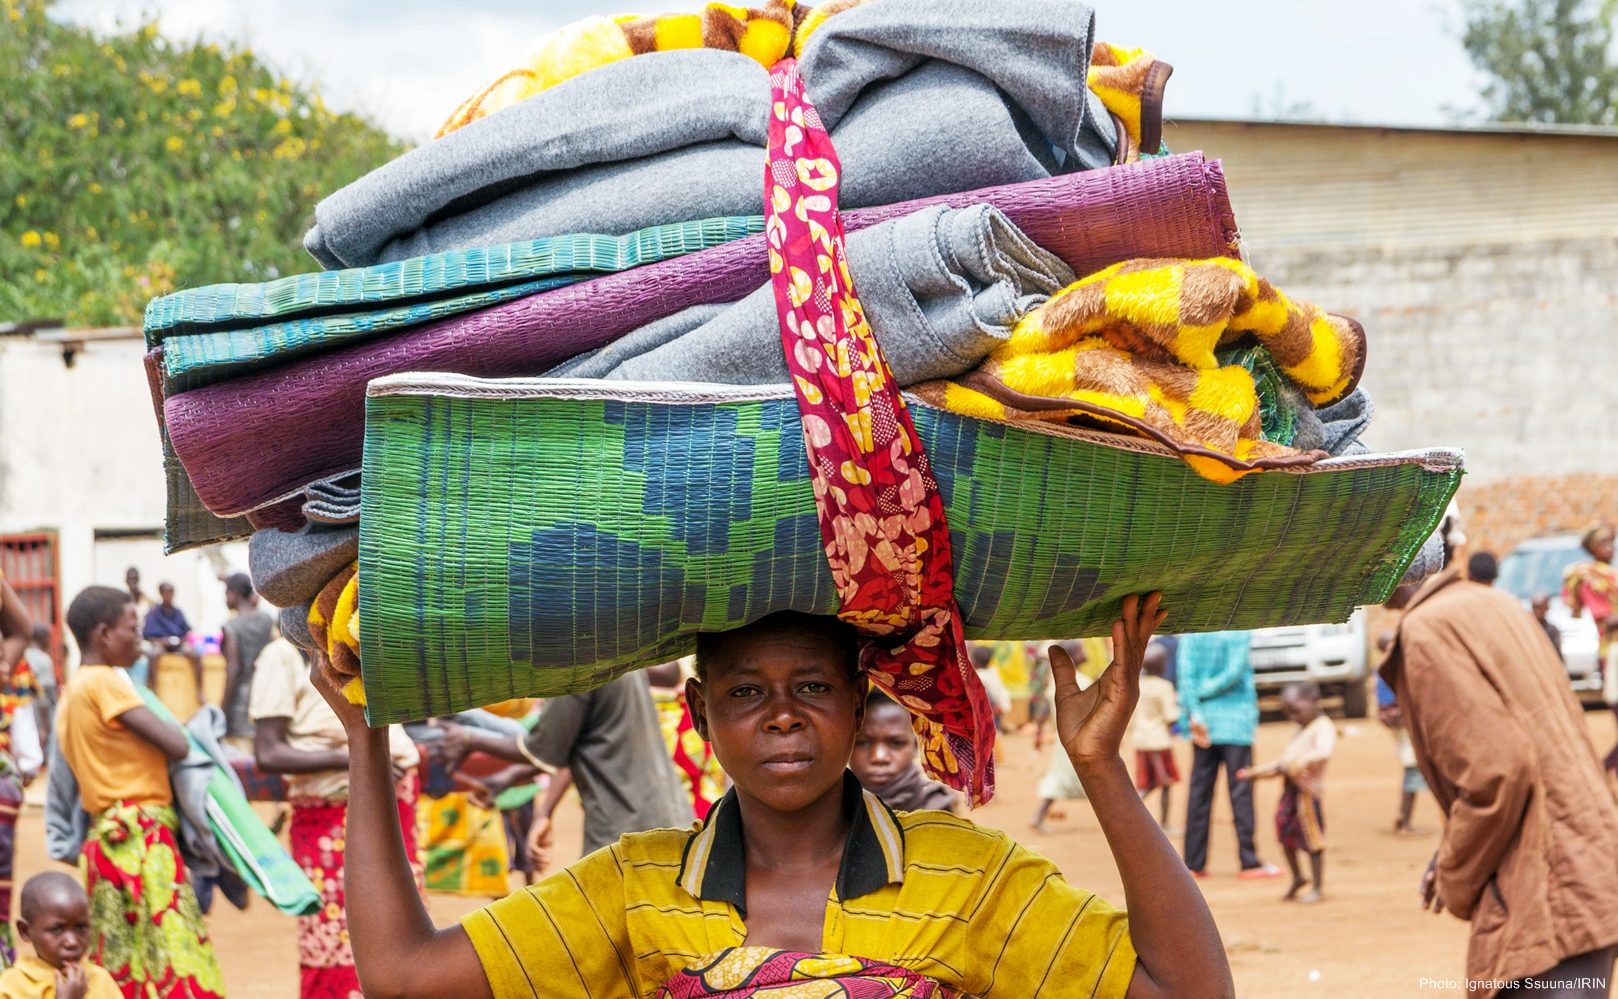 A Burundian mother flees into Rwanda to escape violence back home